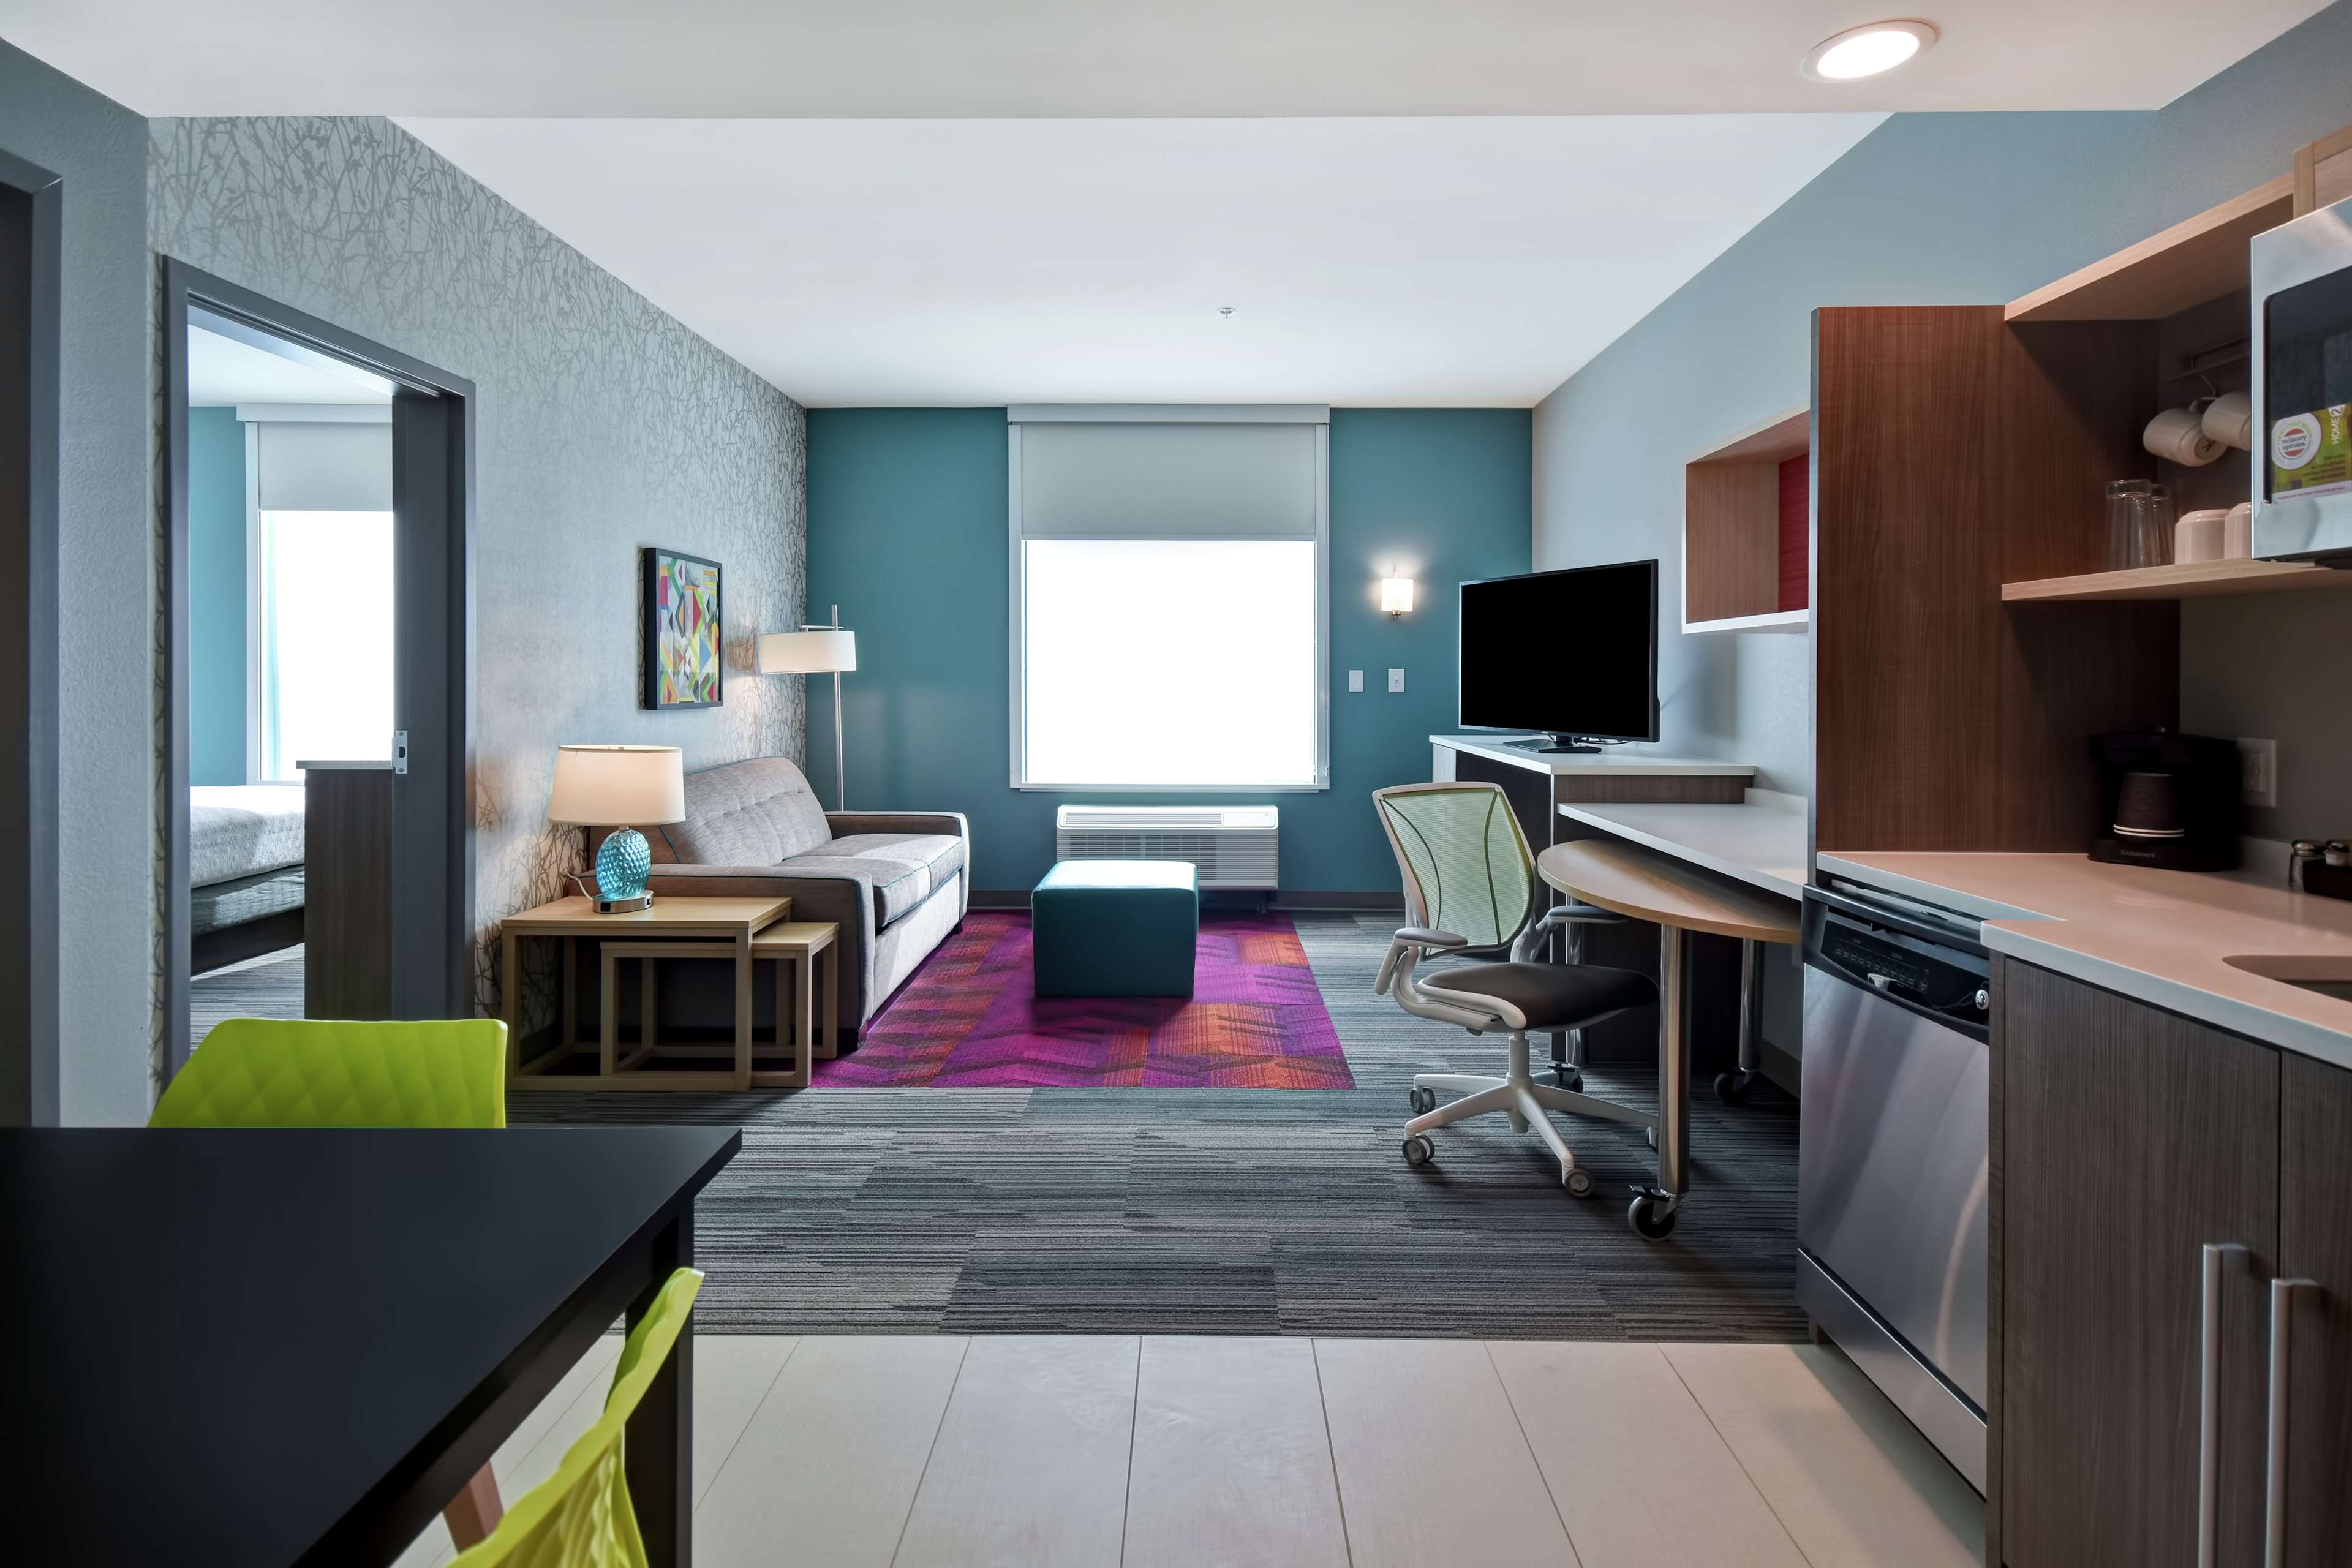 Home2 Suites by Hilton Shreveport Photo